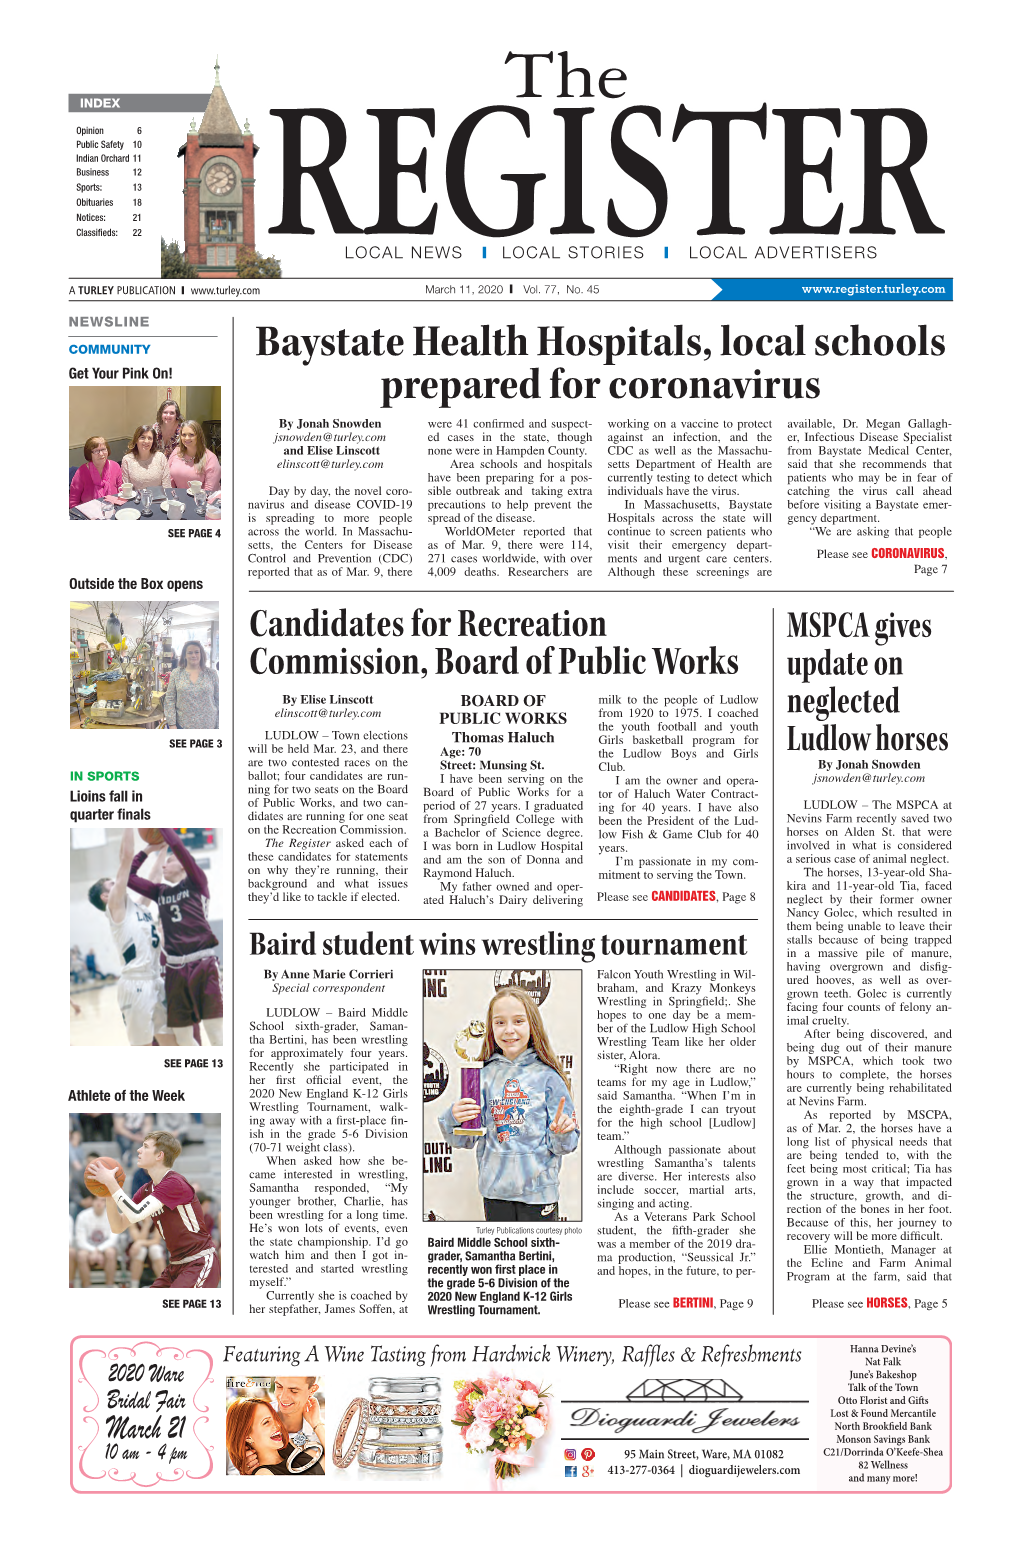 Baystate Health Hospitals, Local Schools Prepared for Coronavirus